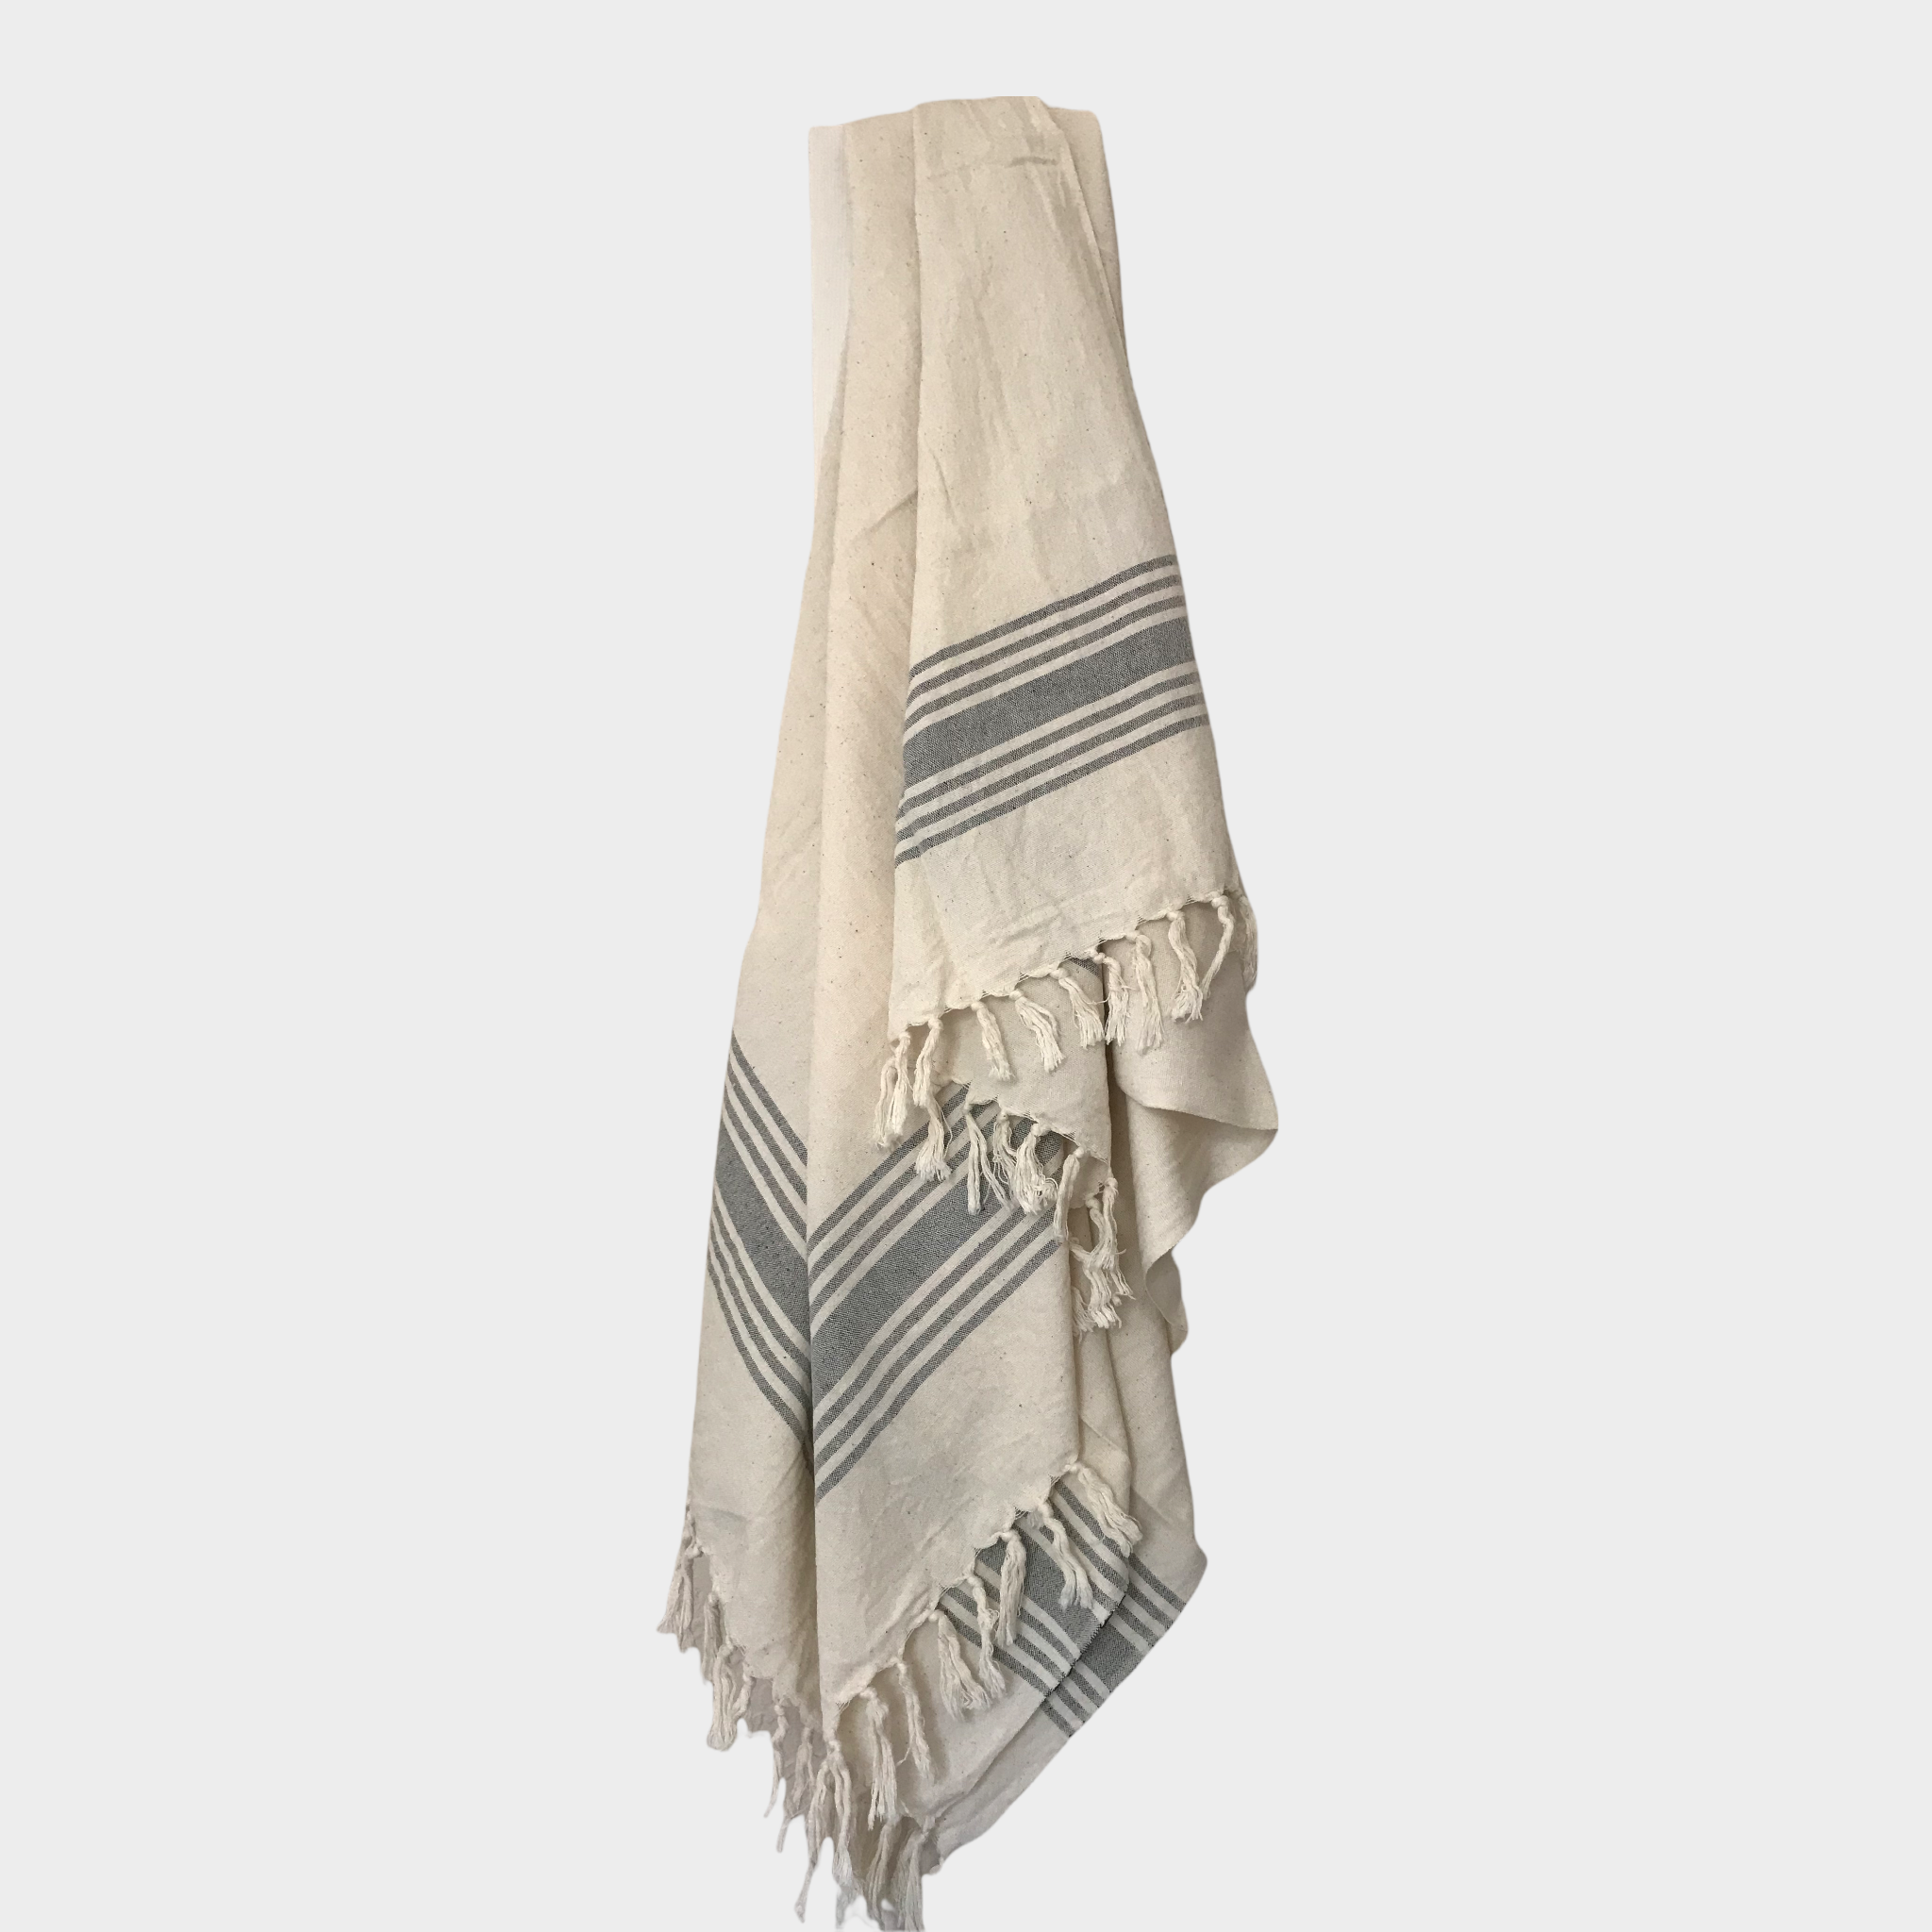 Meshefe Handwoven Turkish Cotton Towel